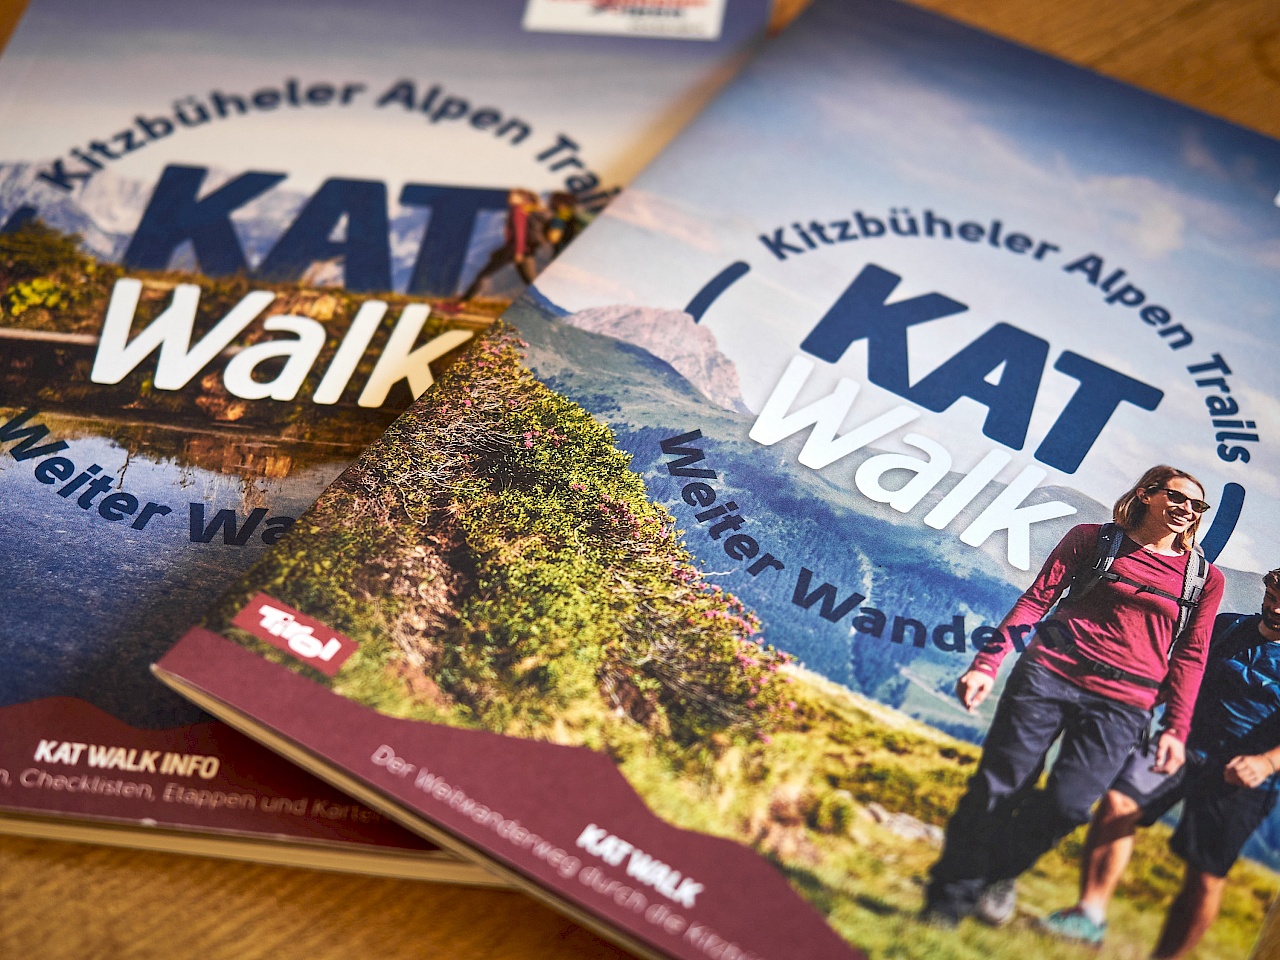 Der Kitzbüheler Alpen Trail (KAT Walk)